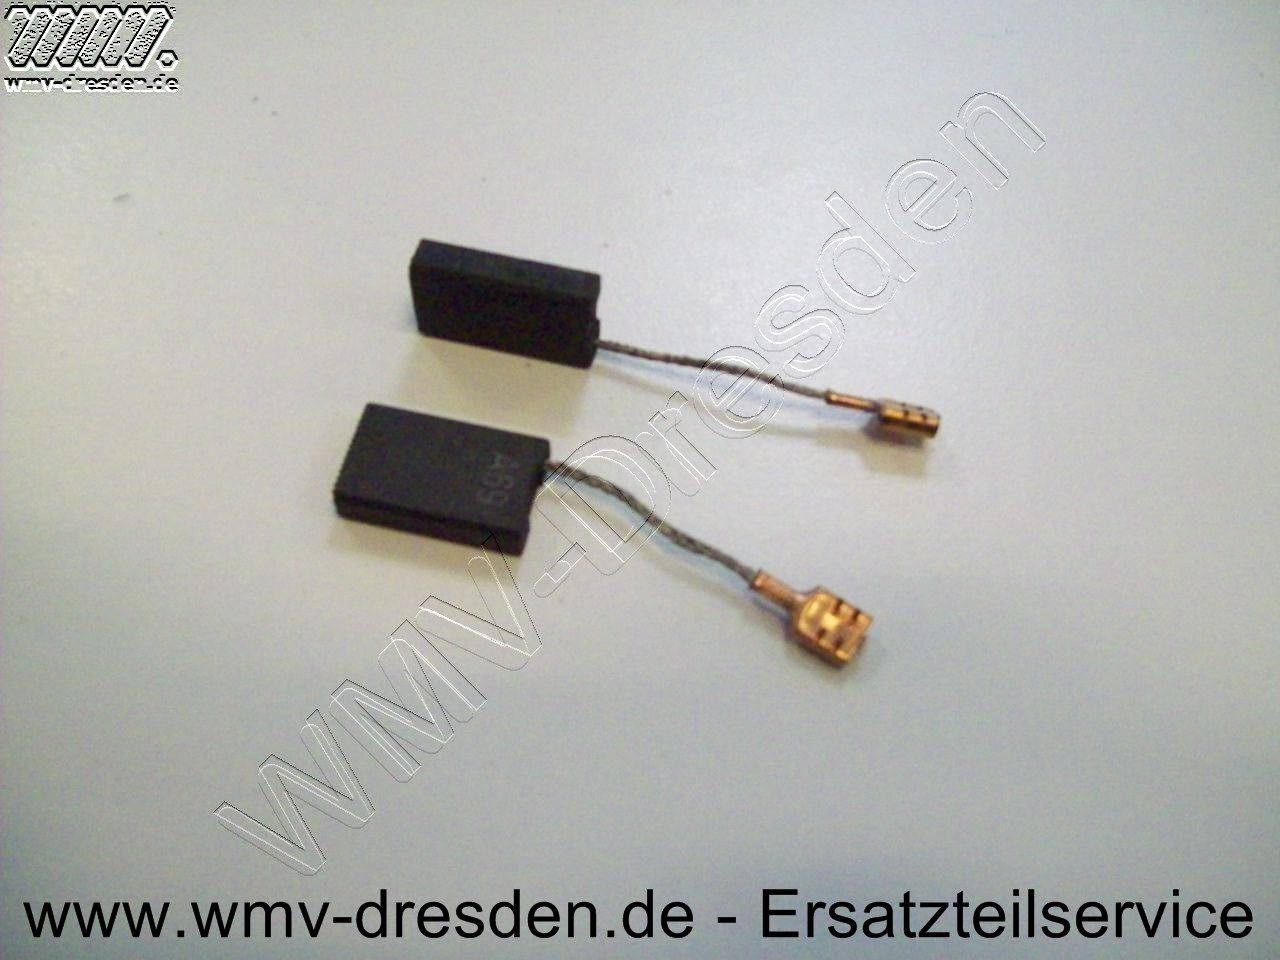 Artikel 1617014126-B17 Hersteller: Bosch-Skil-Dremel 